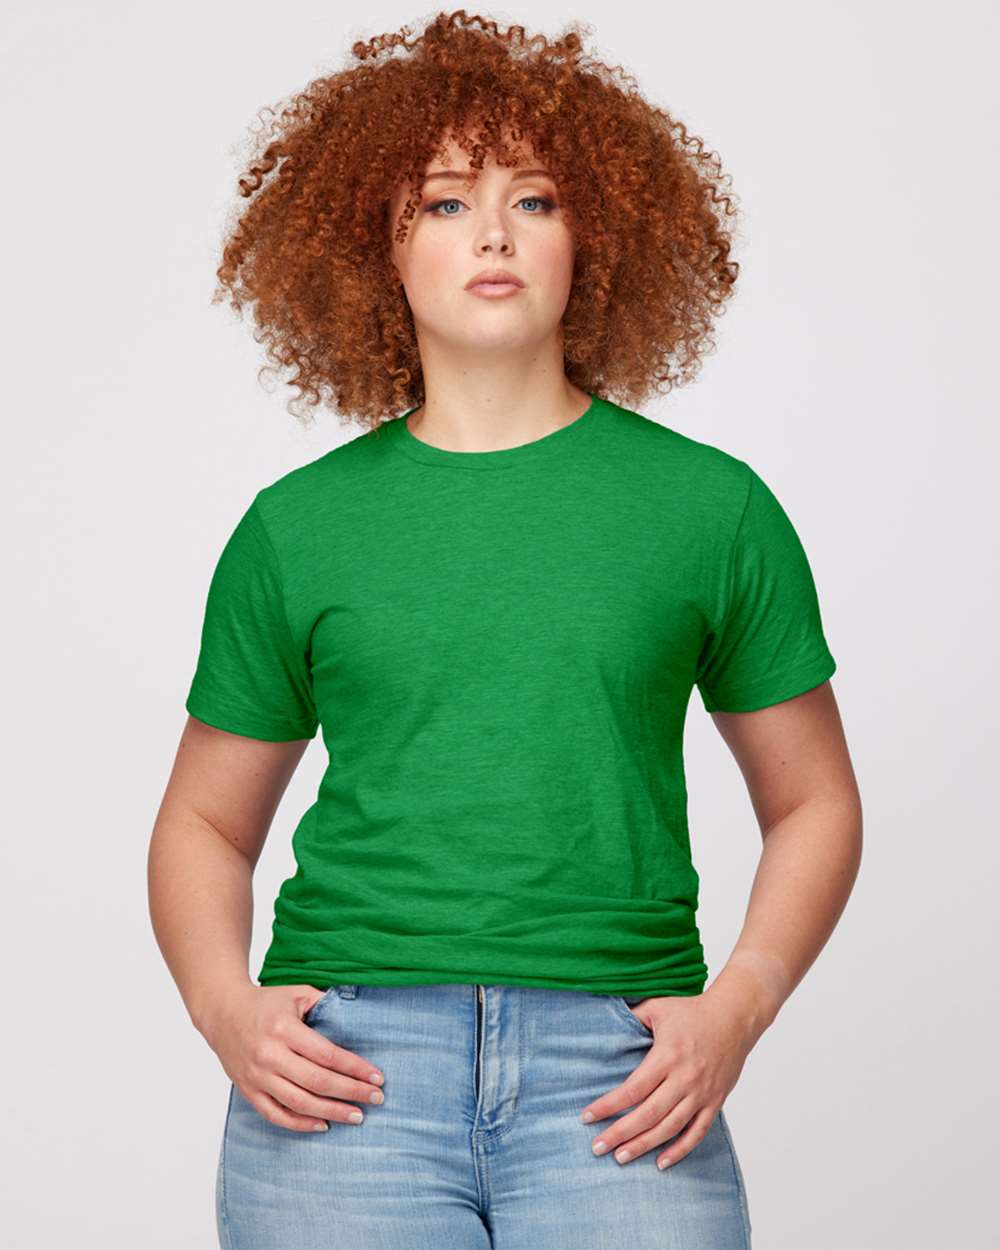 Tultex 202 - Unisex Fine Jersey T-Shirt